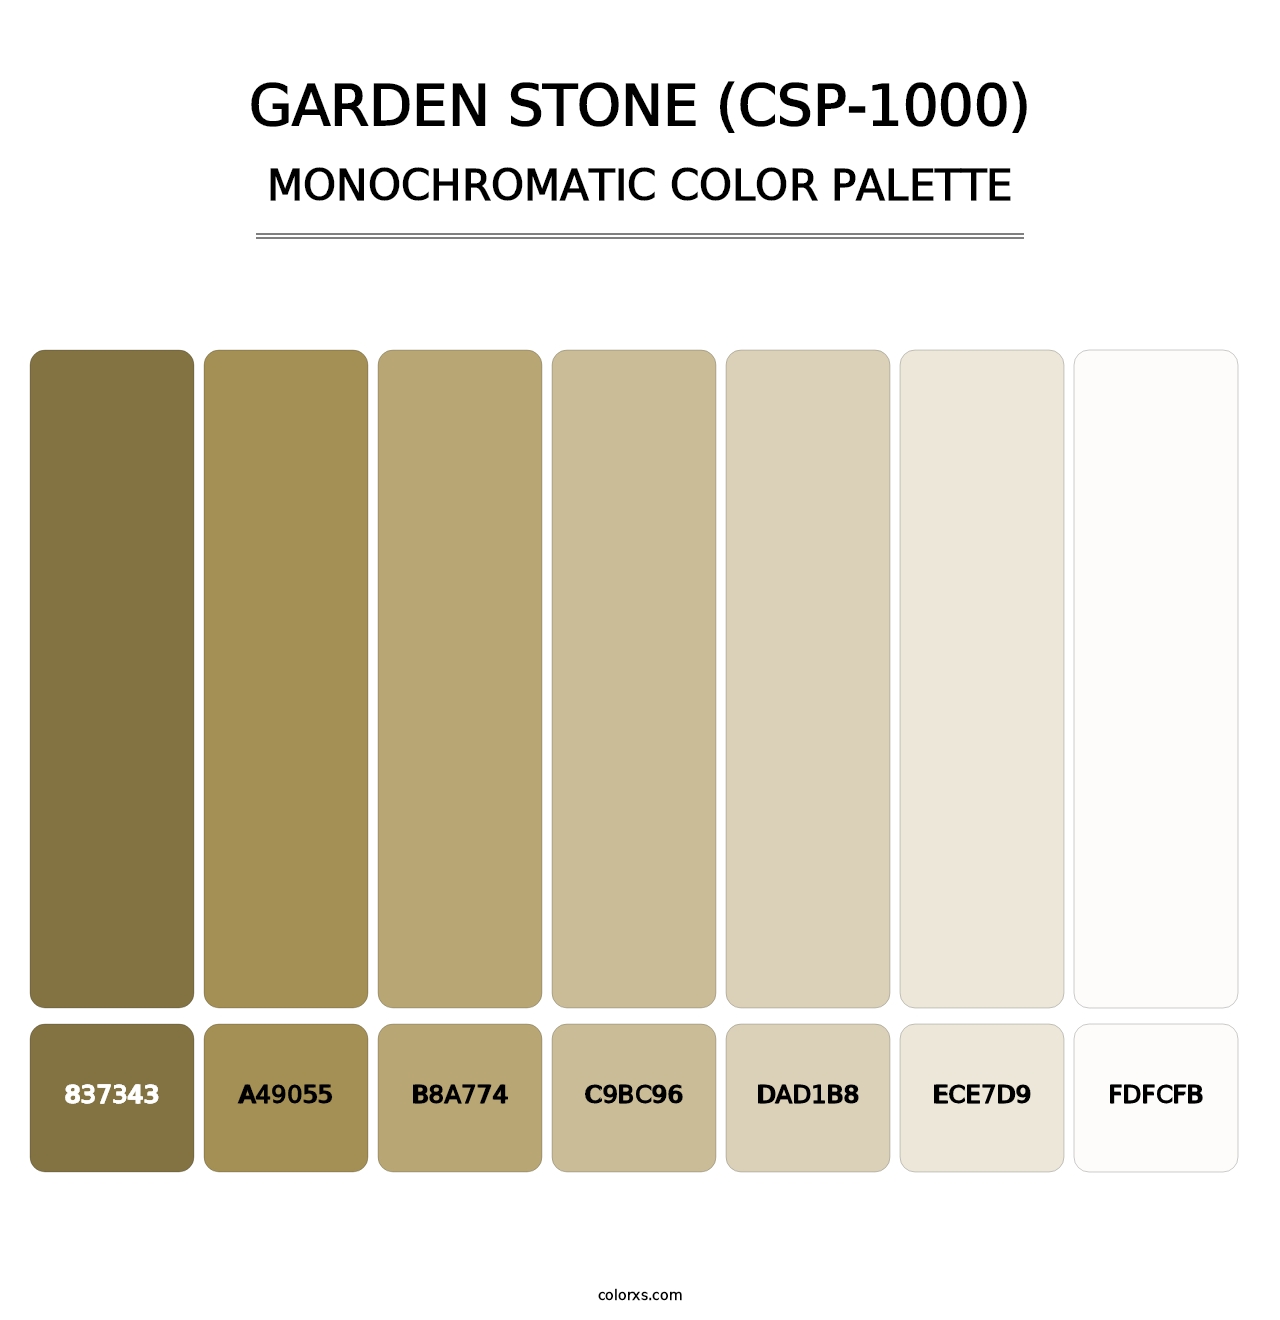 Garden Stone (CSP-1000) - Monochromatic Color Palette